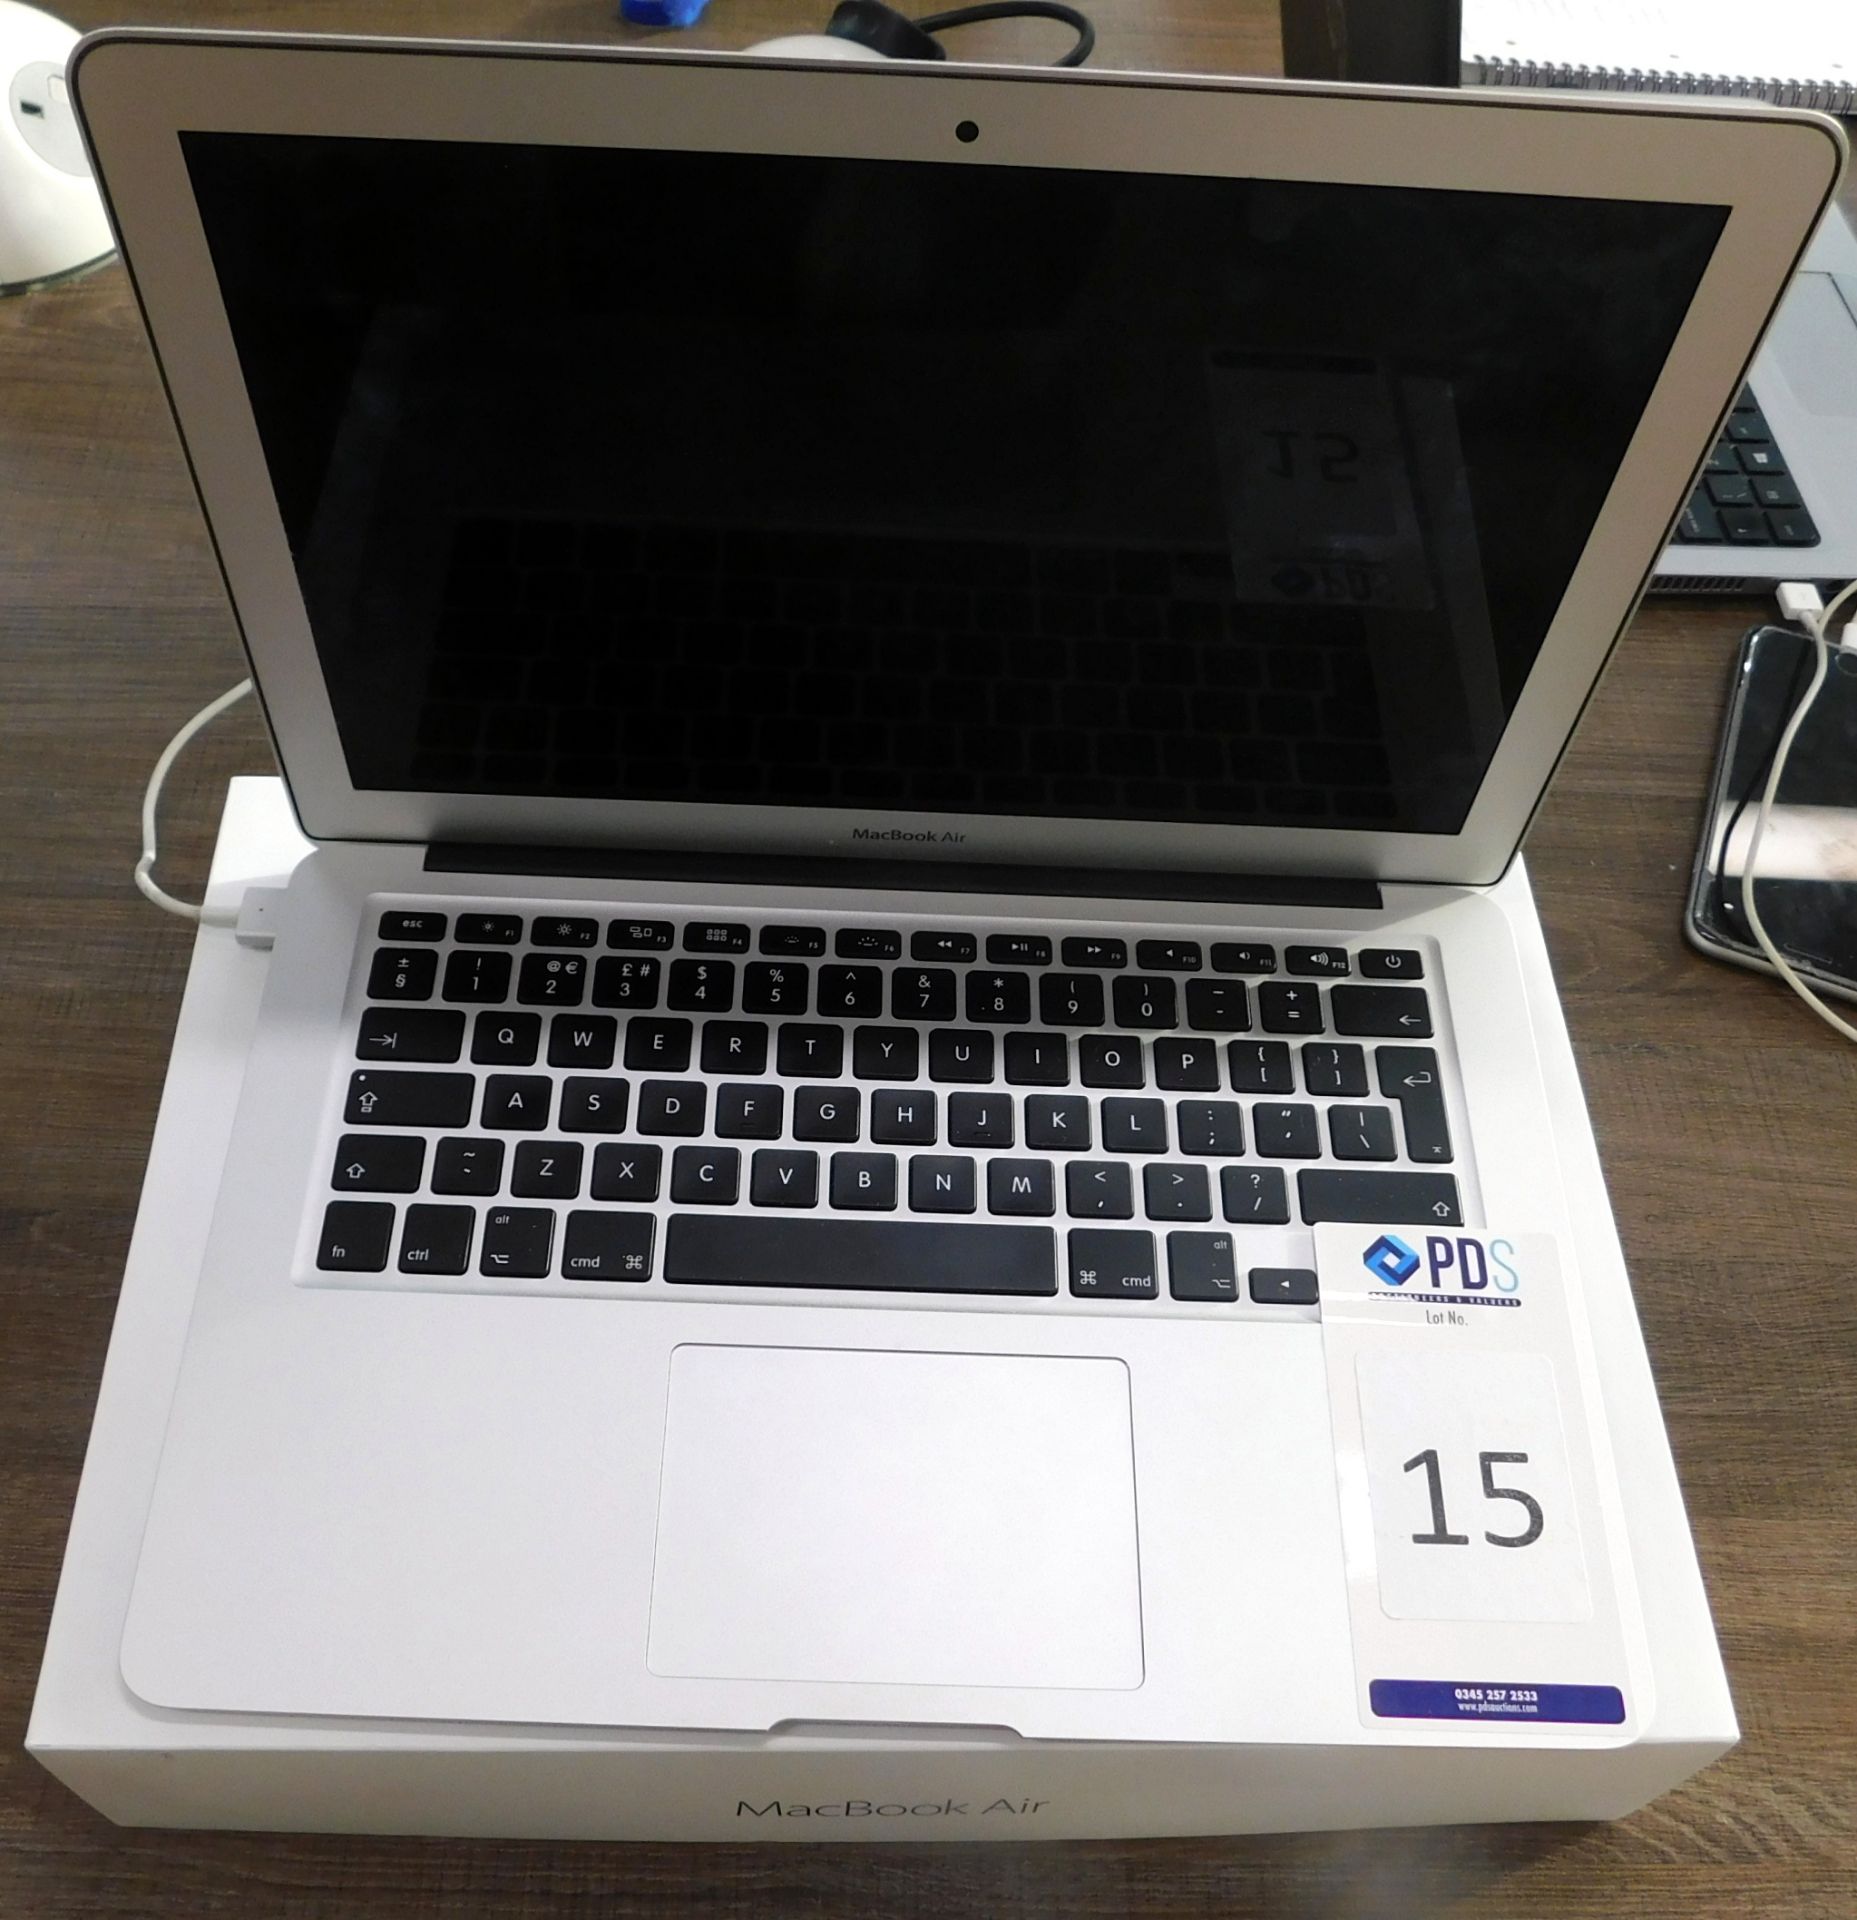 Apple MacBook Air i5 13in, 1.6ghz Processor, 4gb RAM, 128gb SSD, A1466 s/n C1MSGZ0UH3QD with Box &